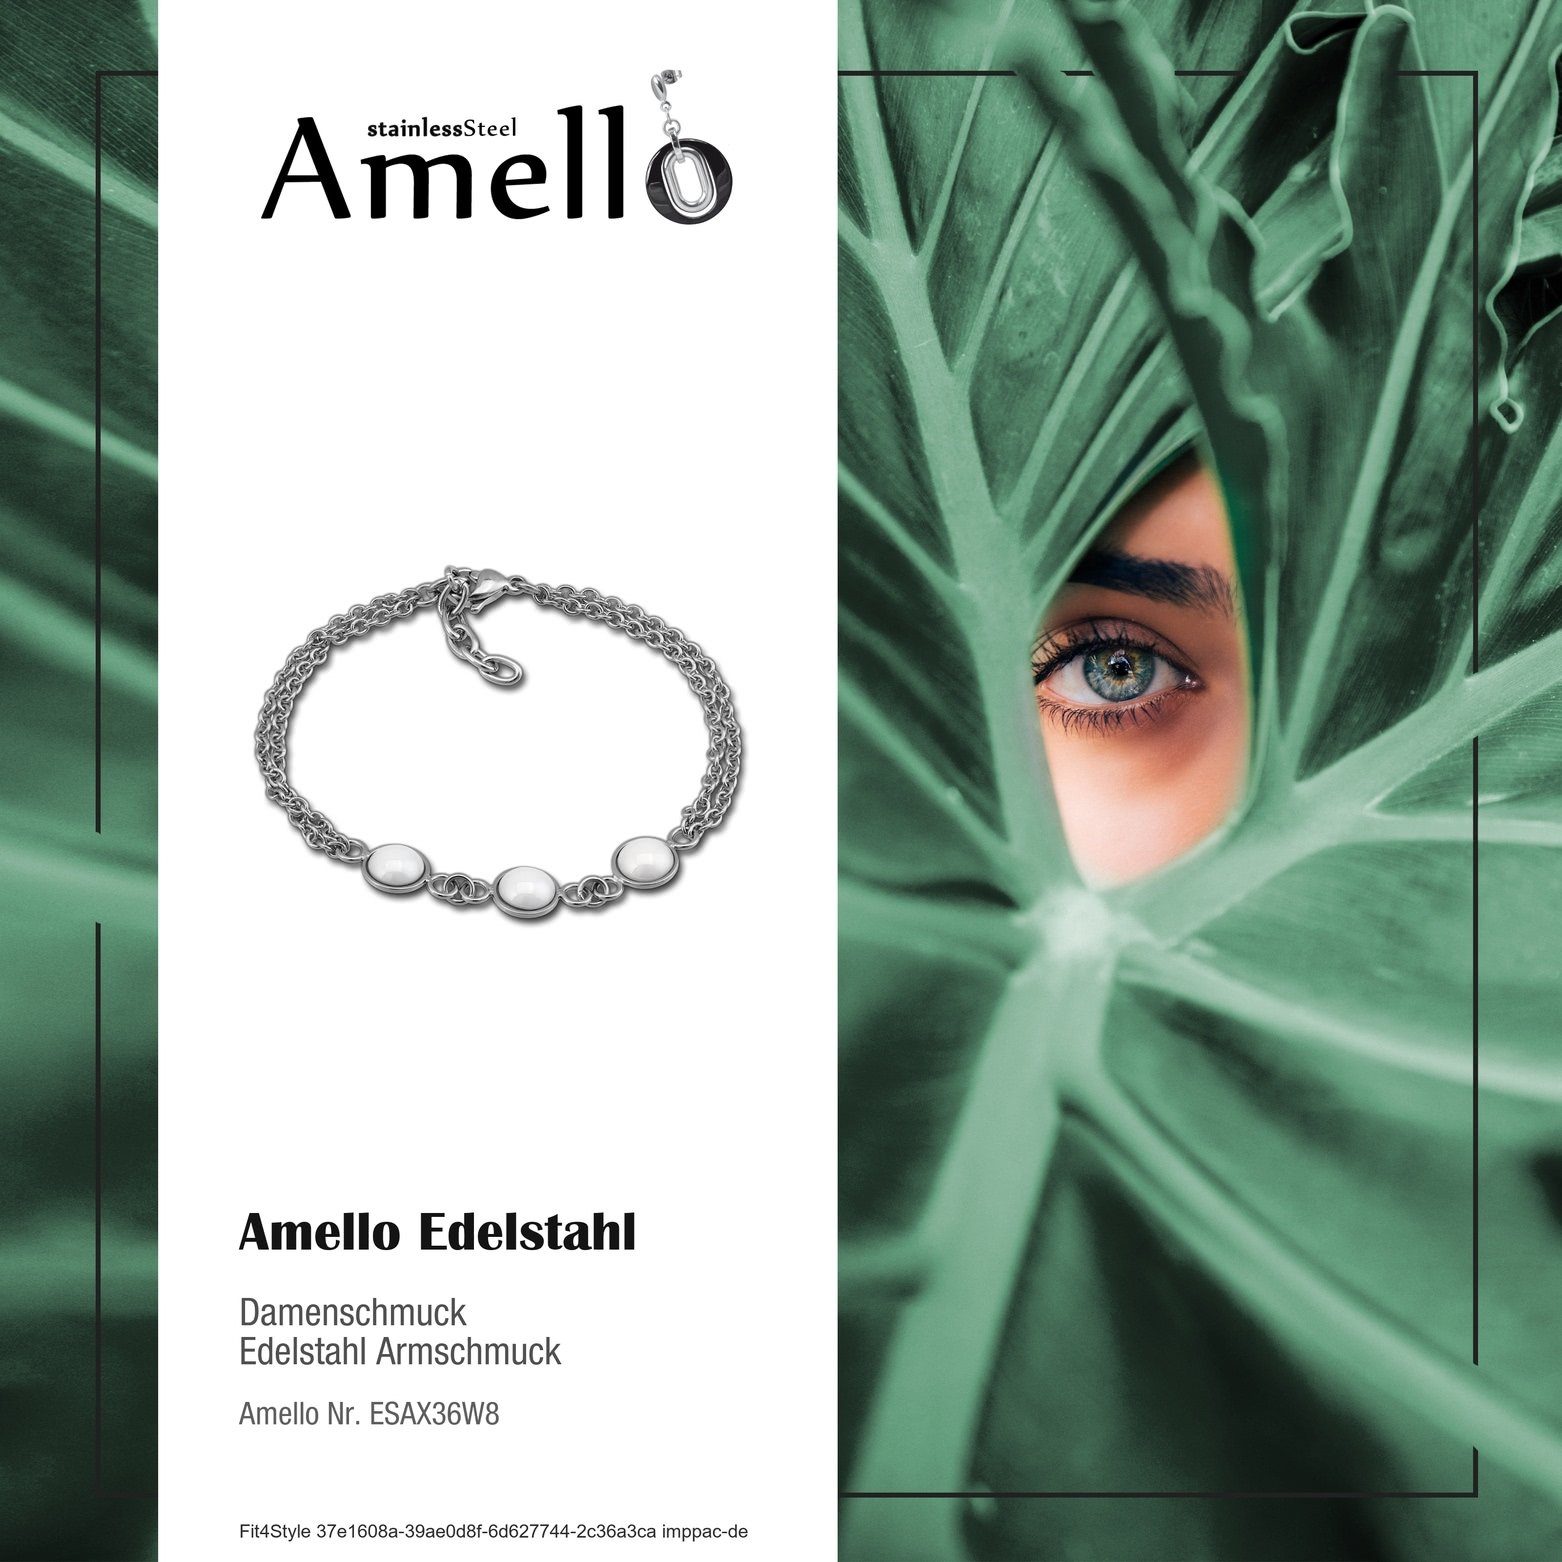 Halbkugel Steel) silber weiß Damen (Stainless für Edelstahl Amello Armbänder Armband Amello (Armband), Edelstahlarmband